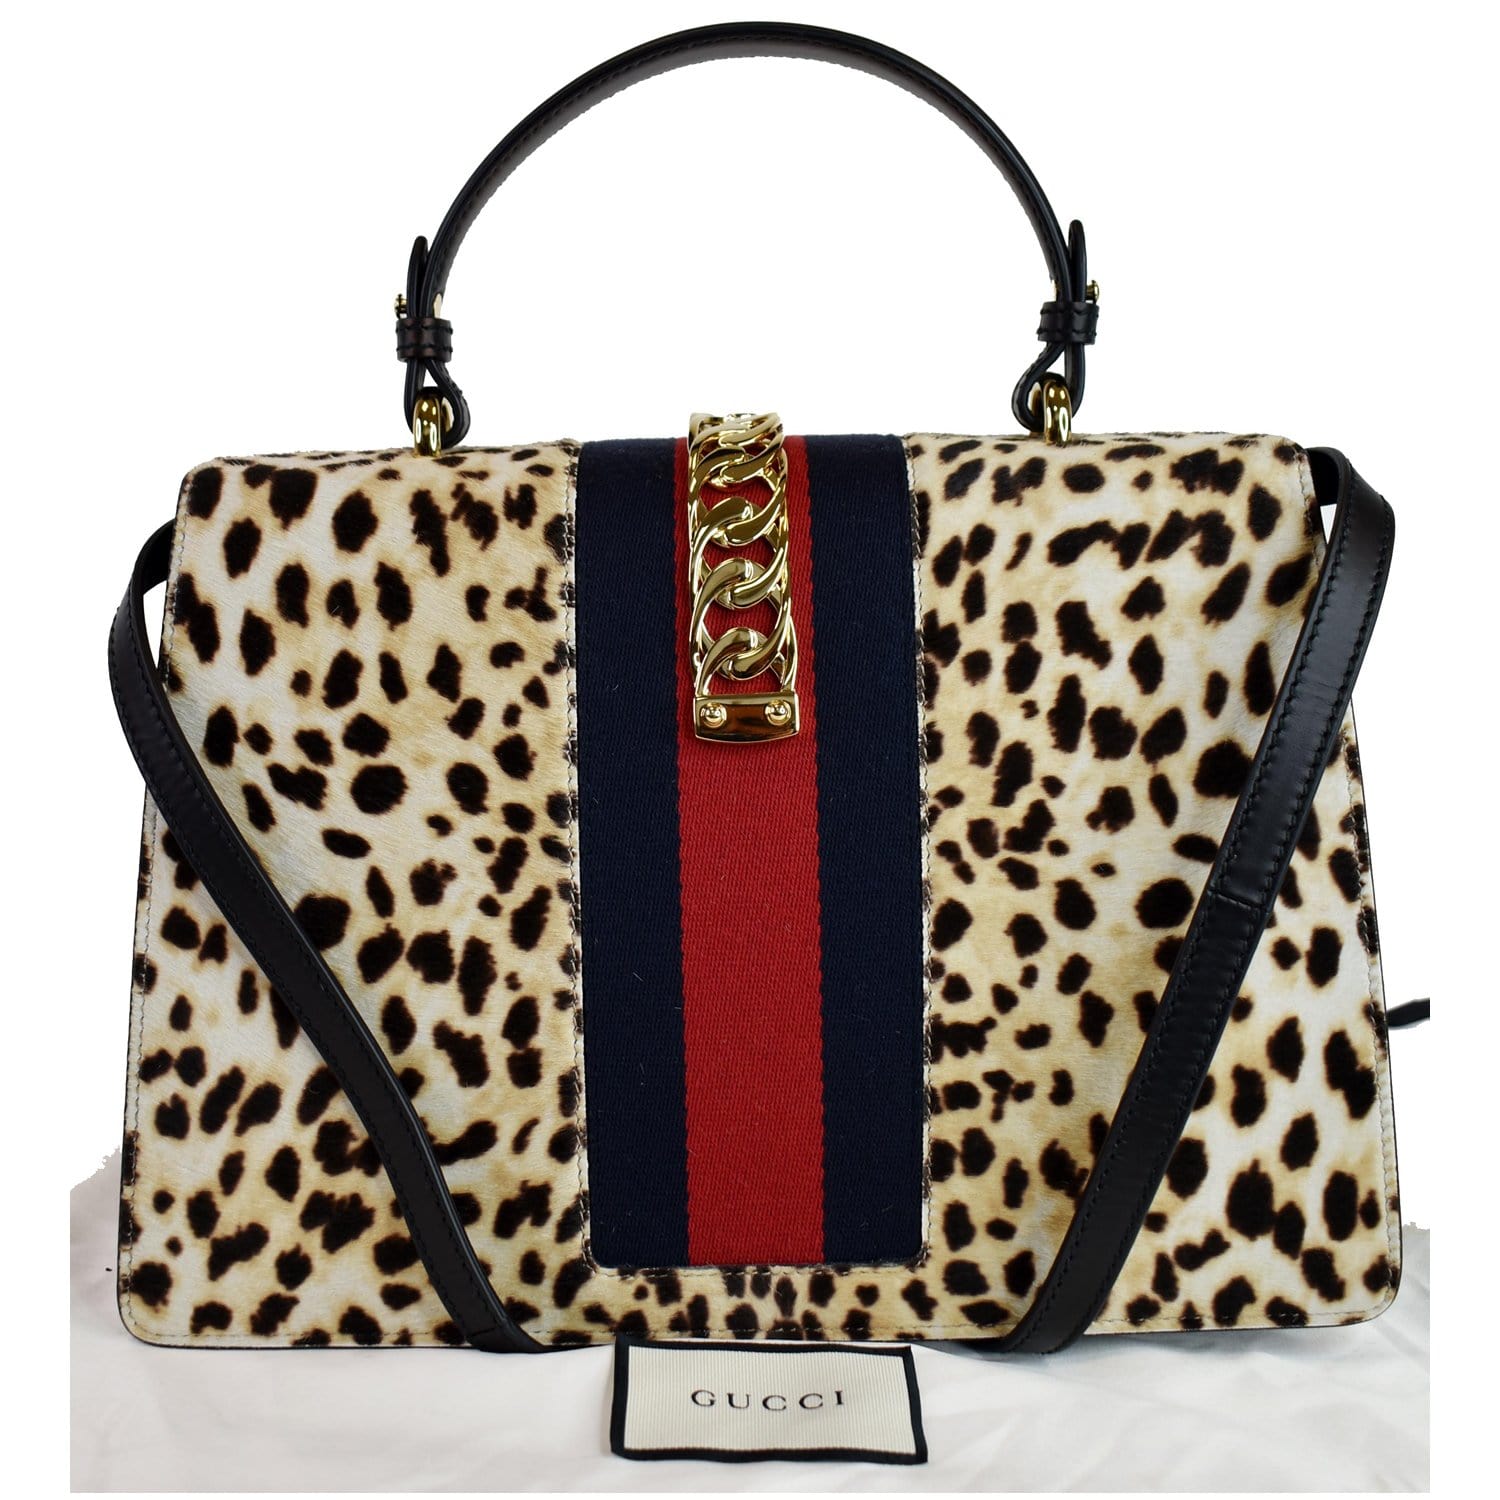 Pu Leather Printed Gucci Handbag, For Casual Wear